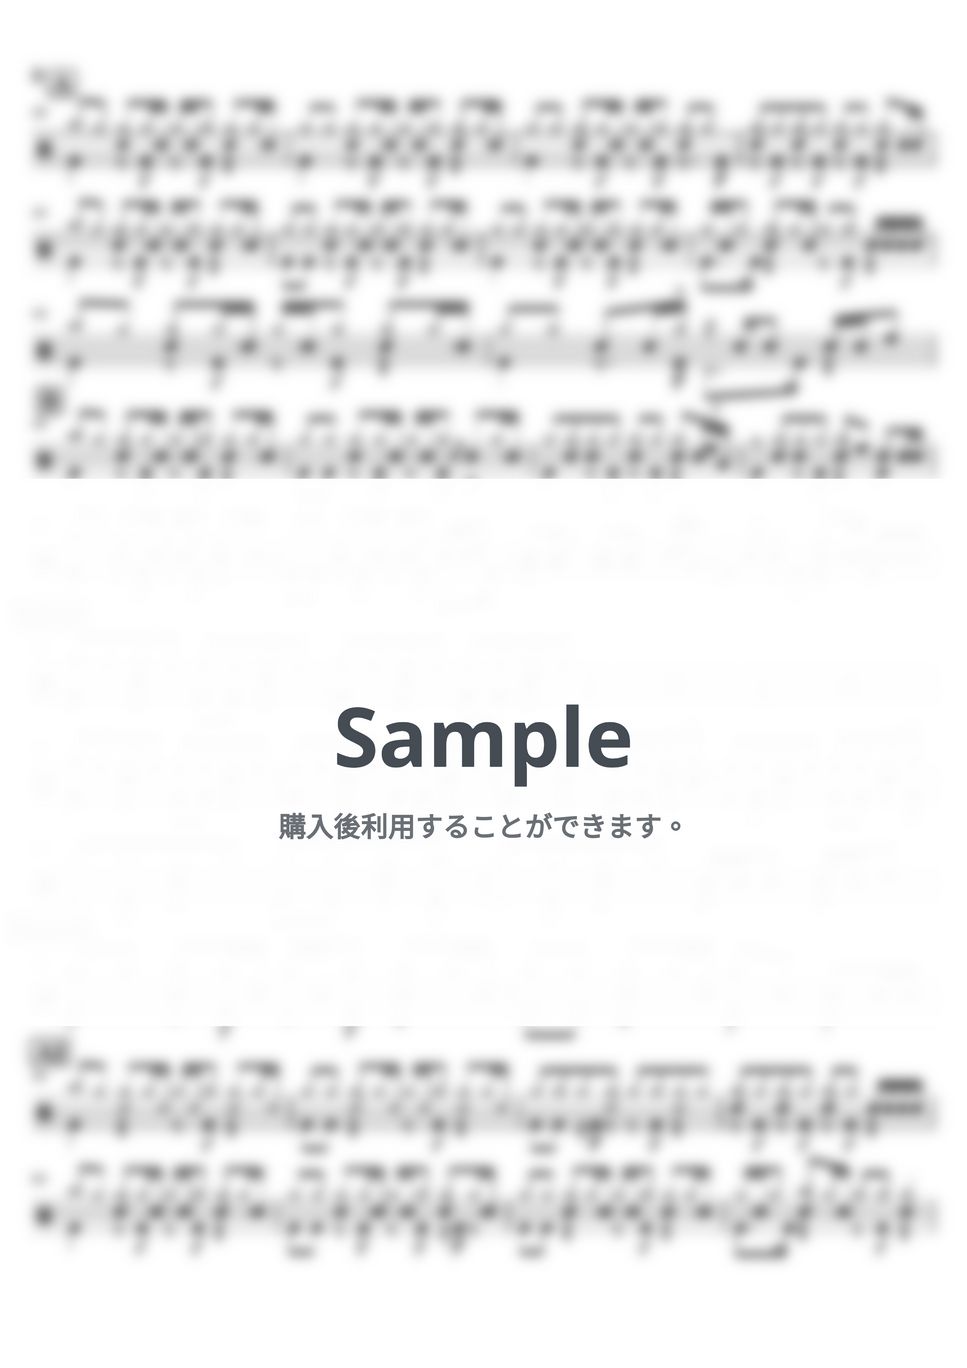 Superfly - タマシイレボリューション (ドラム譜面) by cabal